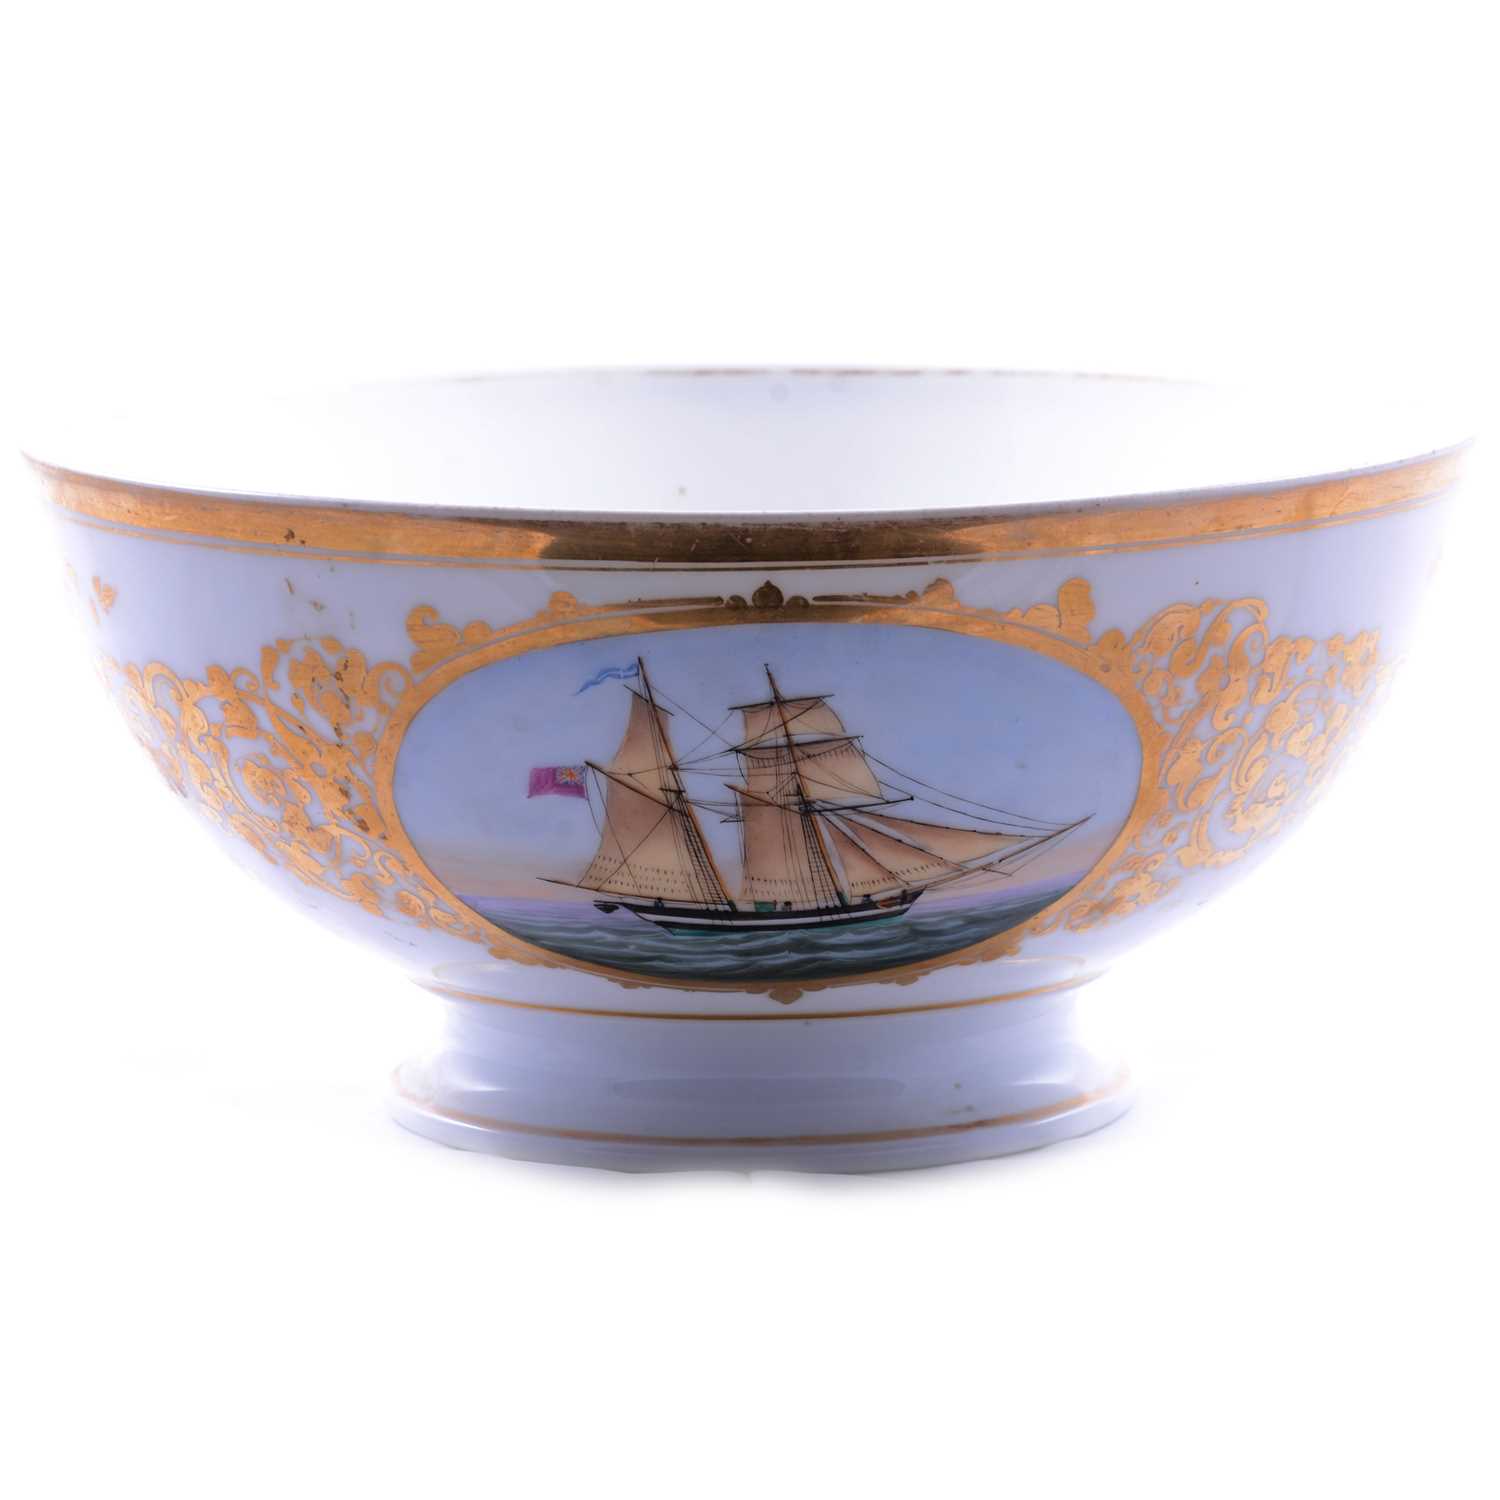 French porcelain rose bowl, painted reserve of a British Schooner